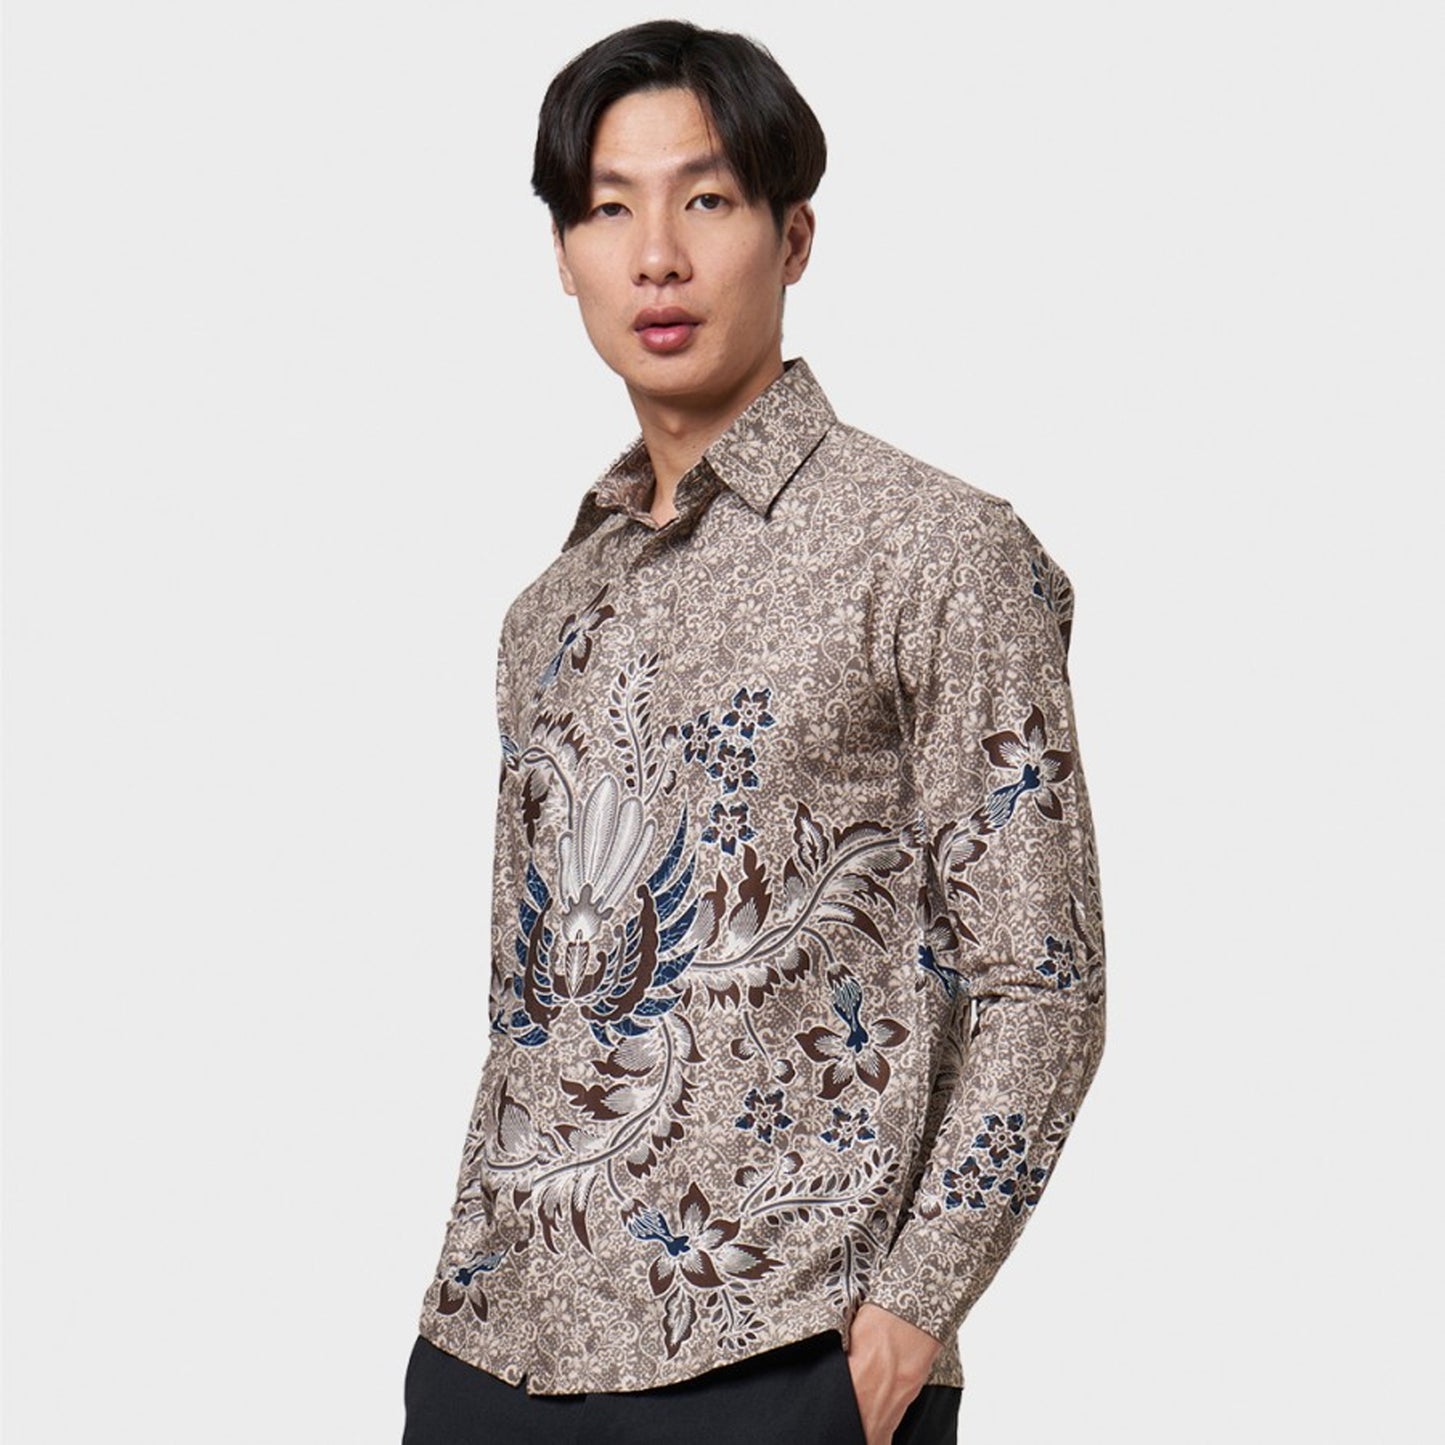 Zeitgenössischer Batik-Stil: Hira Olive Herren-Langarm-Batik-Hemd, stilvolle Herren, Herren-Batik, Batik, Batik-Hemd, formelles Hemd für Männer